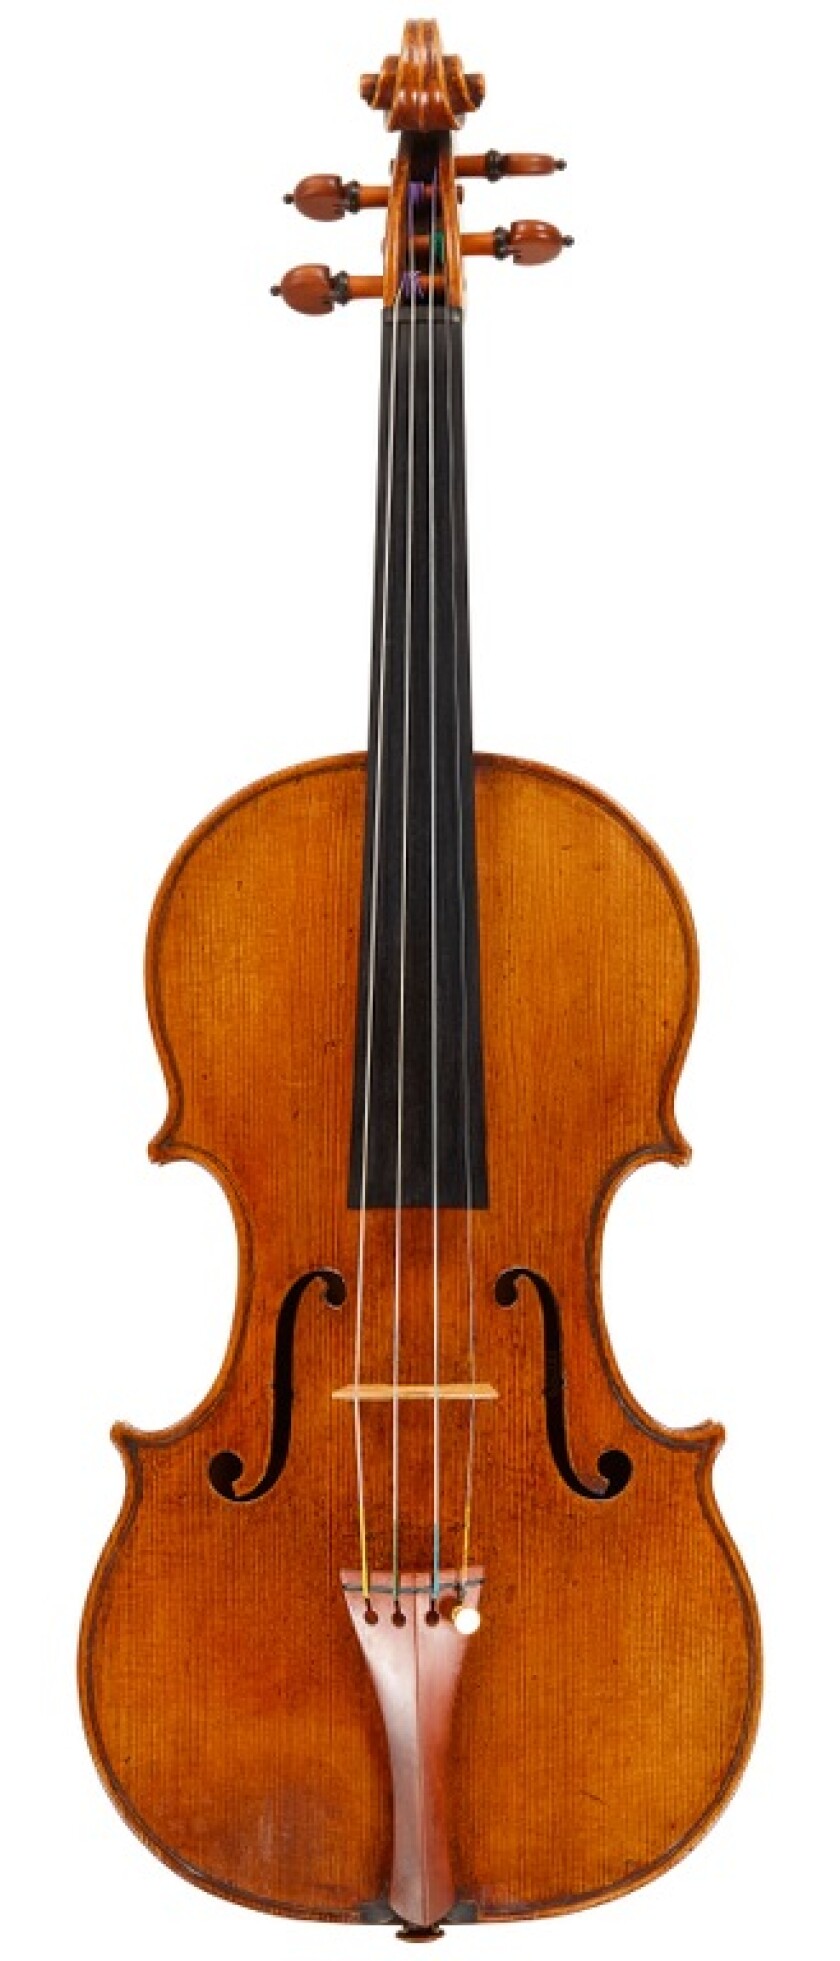 This rare 1710 Amati violin was stolen Dec. 8 from outside a Los Feliz home.